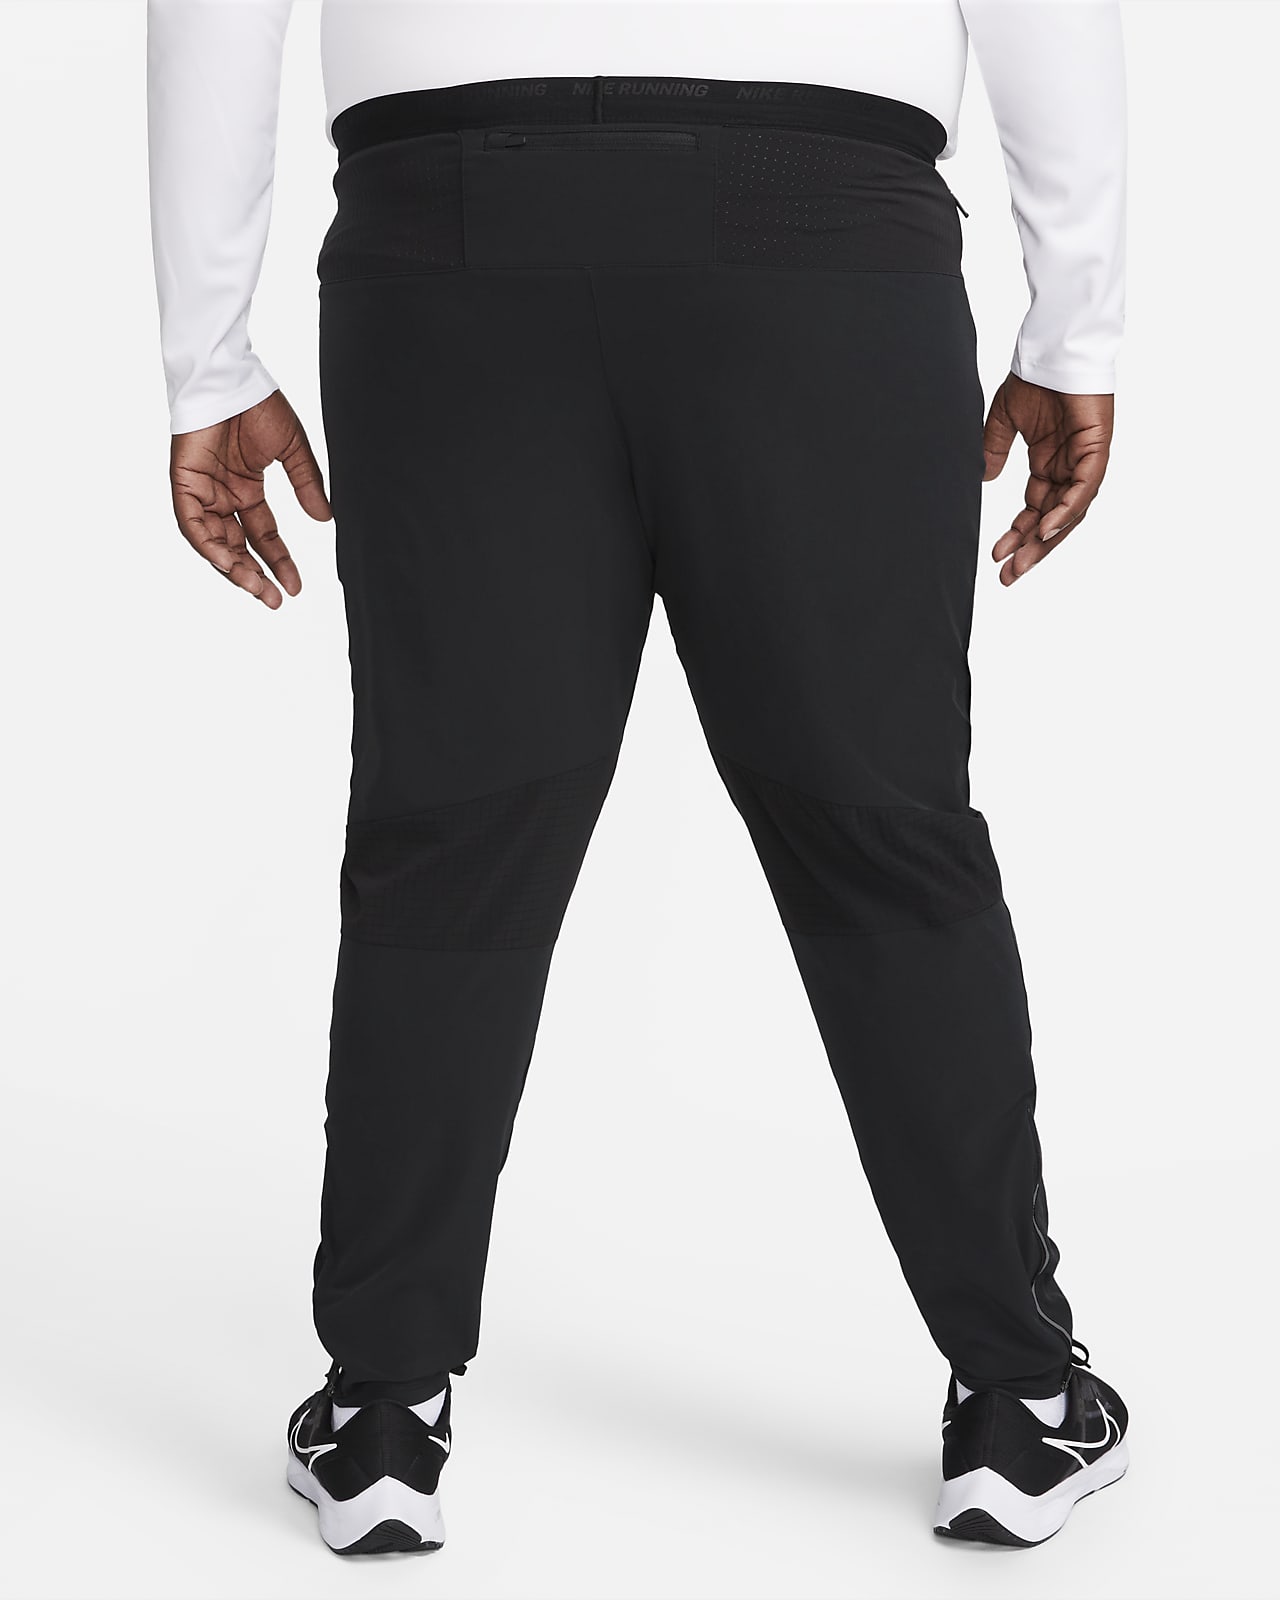 Nike Phenom Elite Reflective Running Pants Blue CU5504-437 Men's Size Large